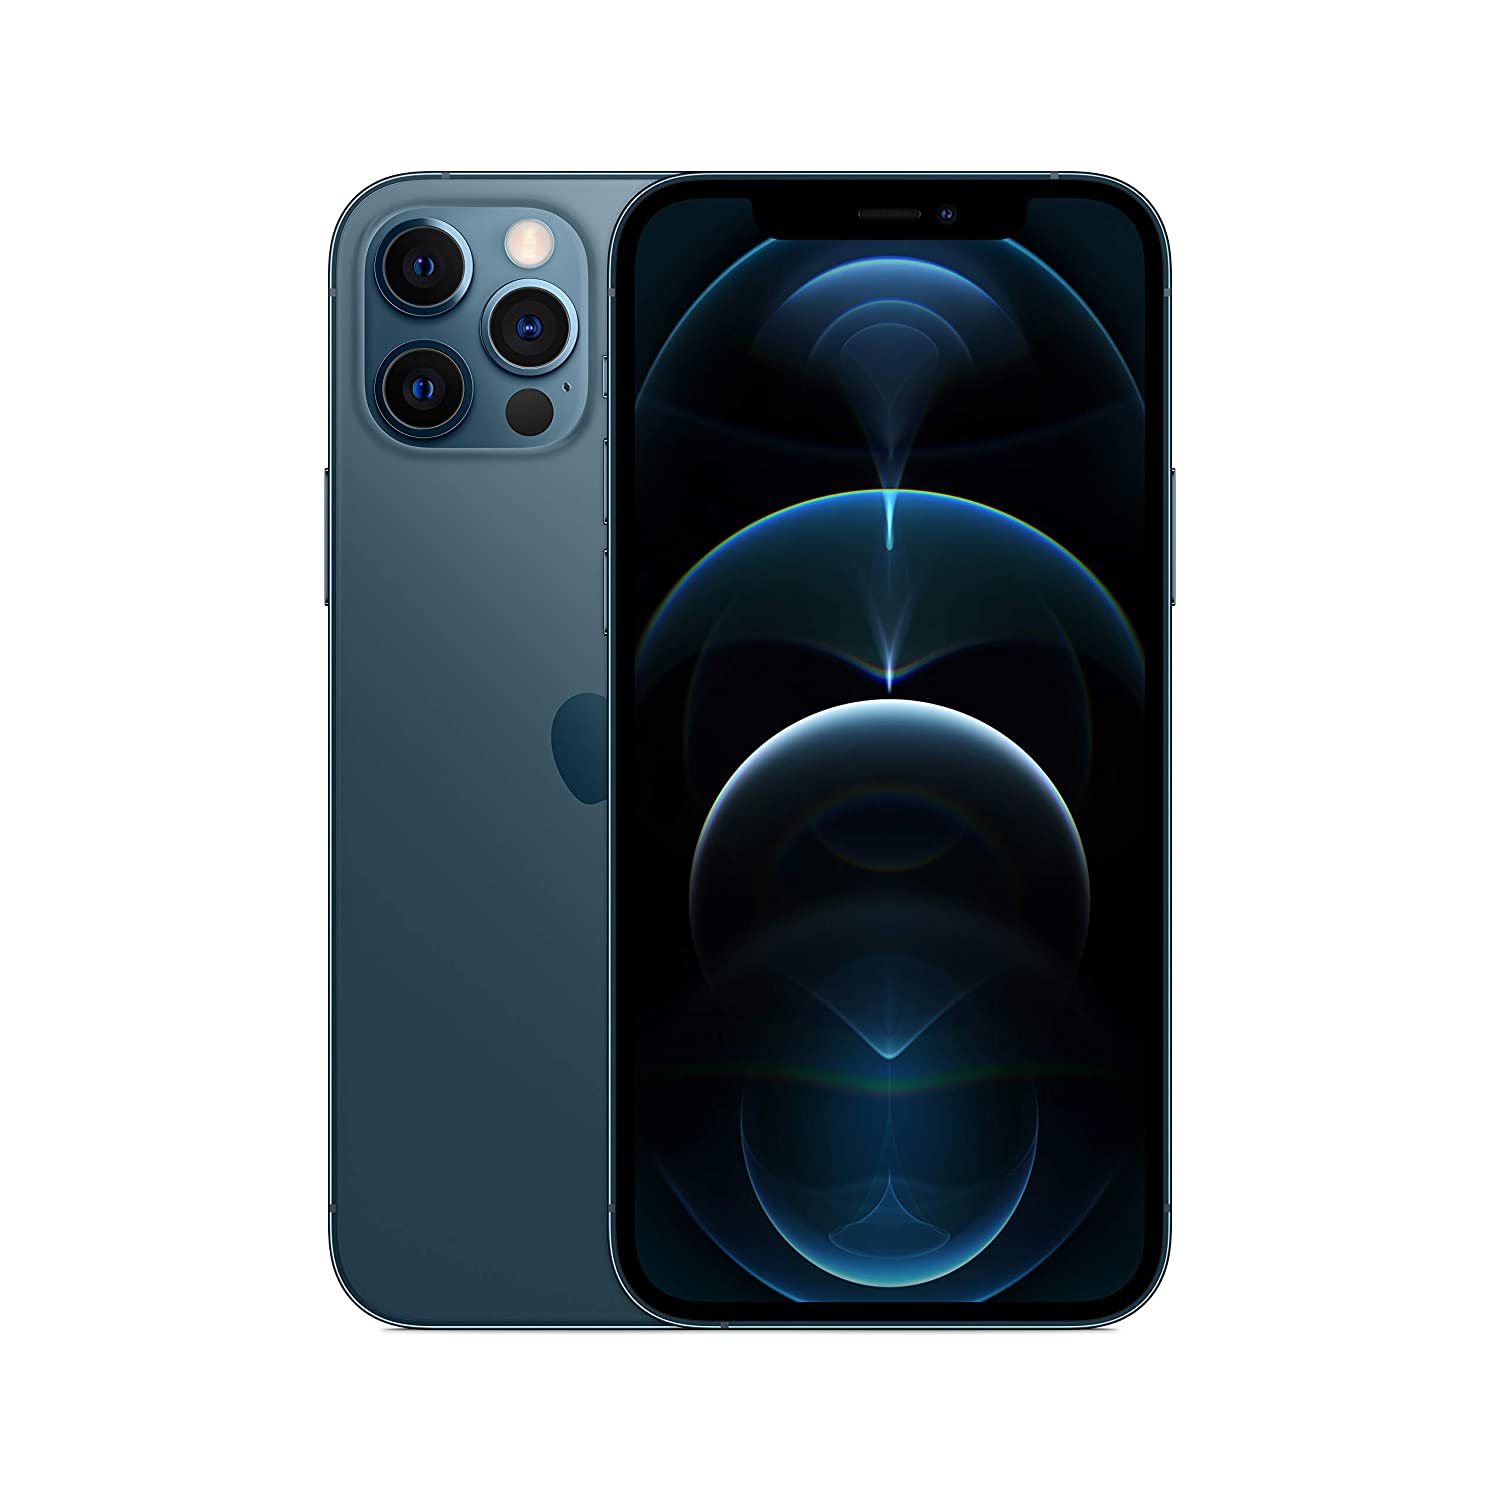 Apple iPhone 12 Pro 512GB Smartphone - Blue - Unlocked - Open Box (10/10 Condition)